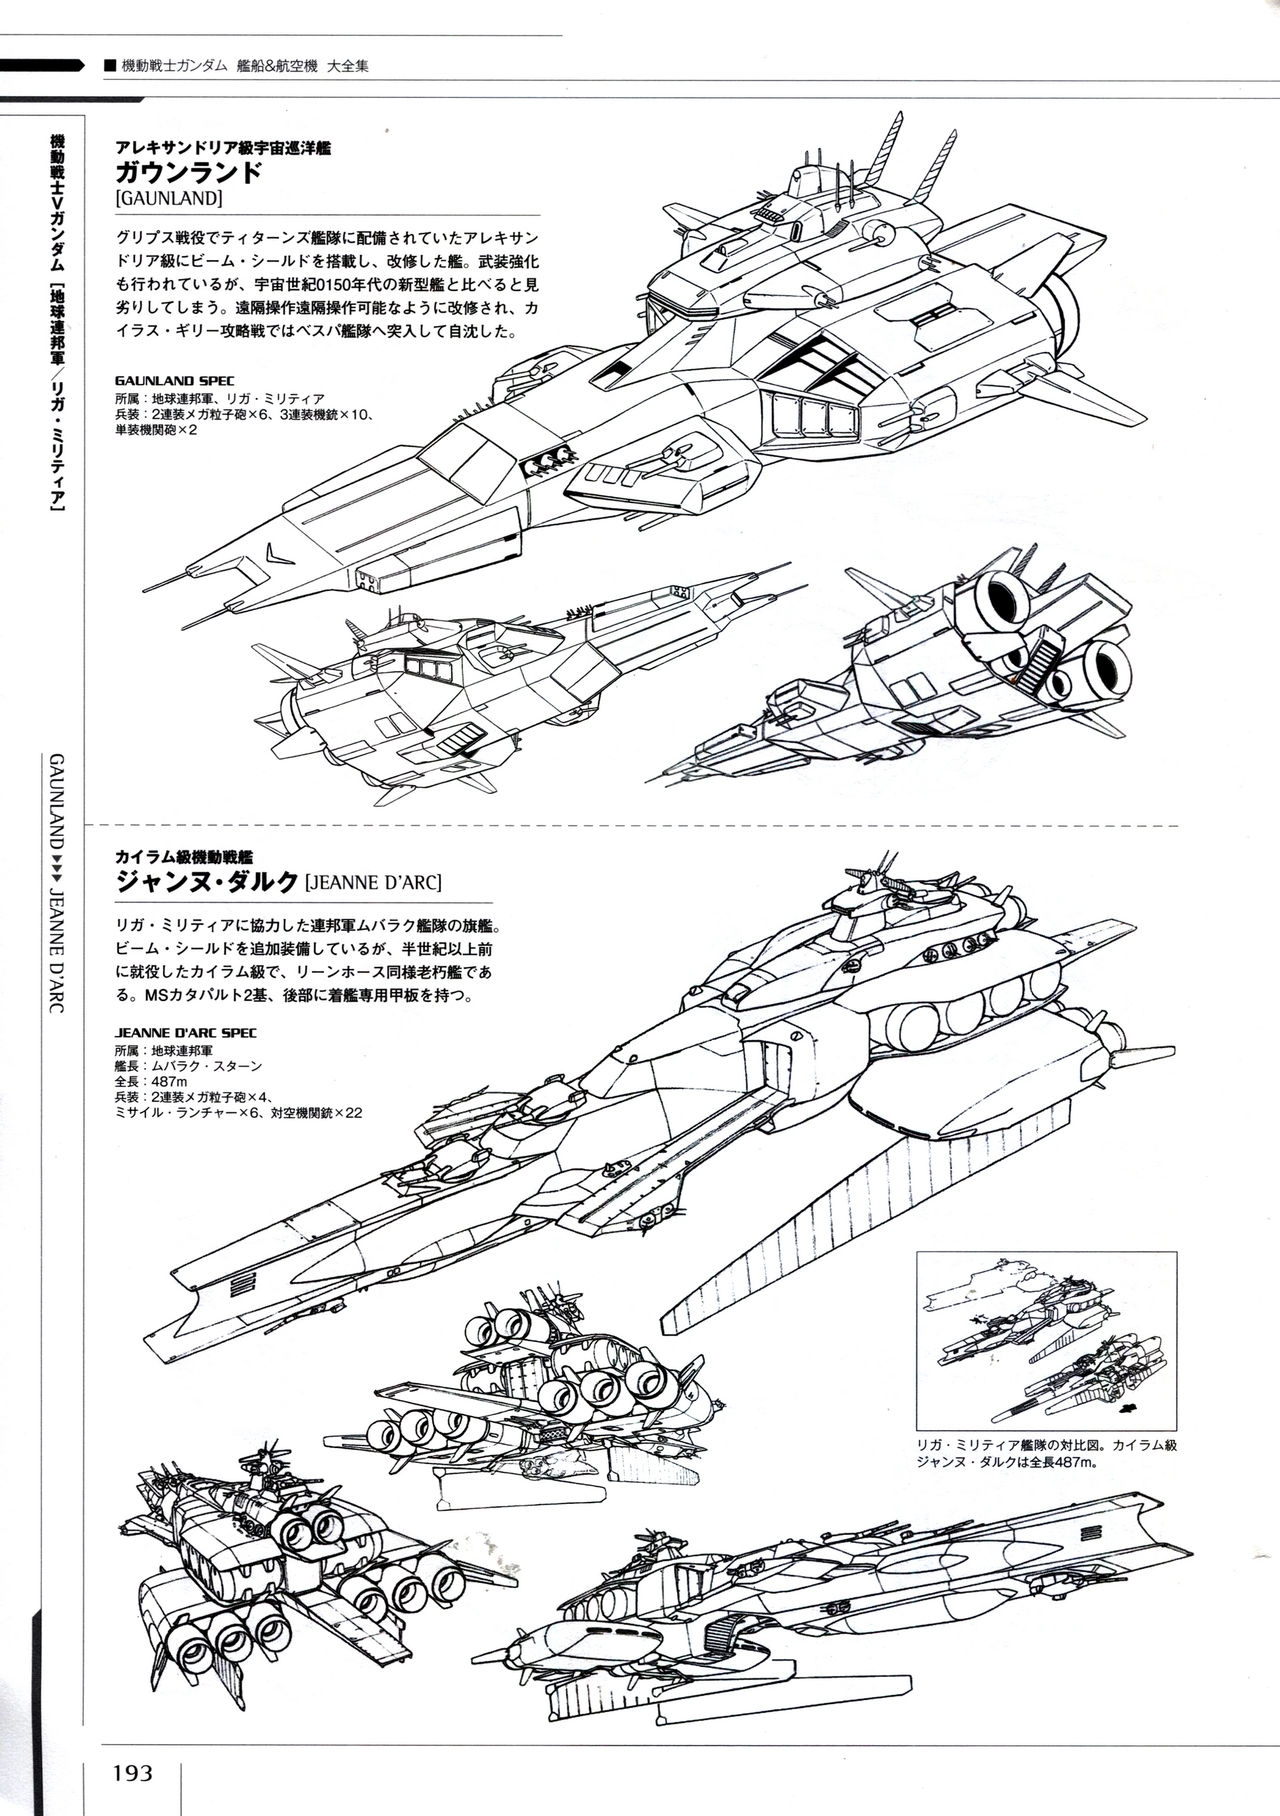 Mobile Suit Gundam - Ship & Aerospace Plane Encyclopedia - Revised Edition 198